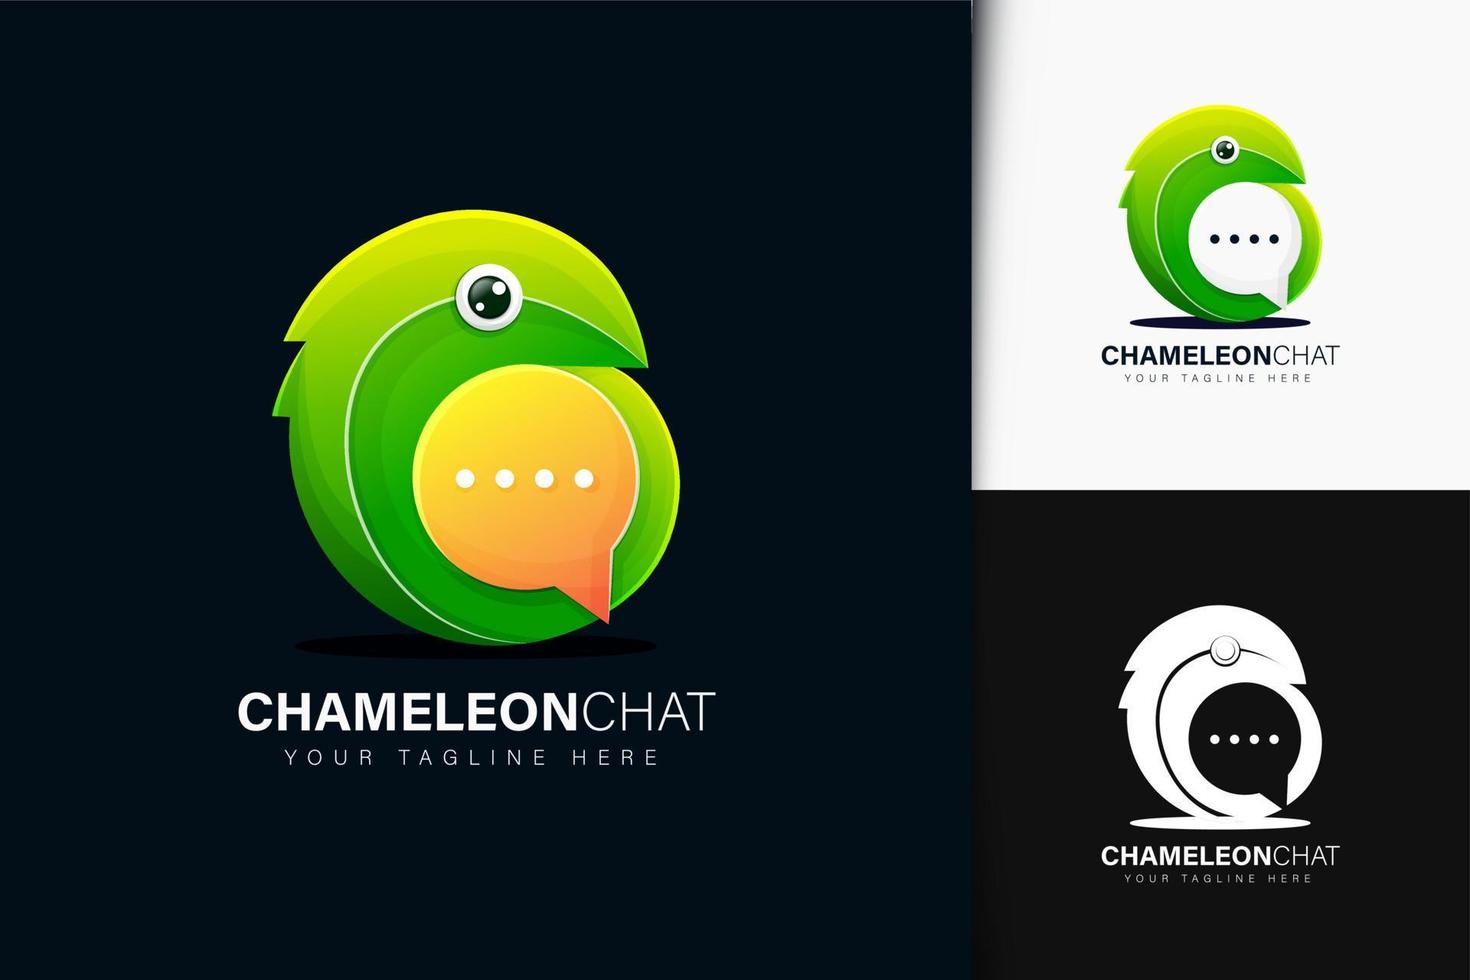 Chameleon chat logo design with gradient vector